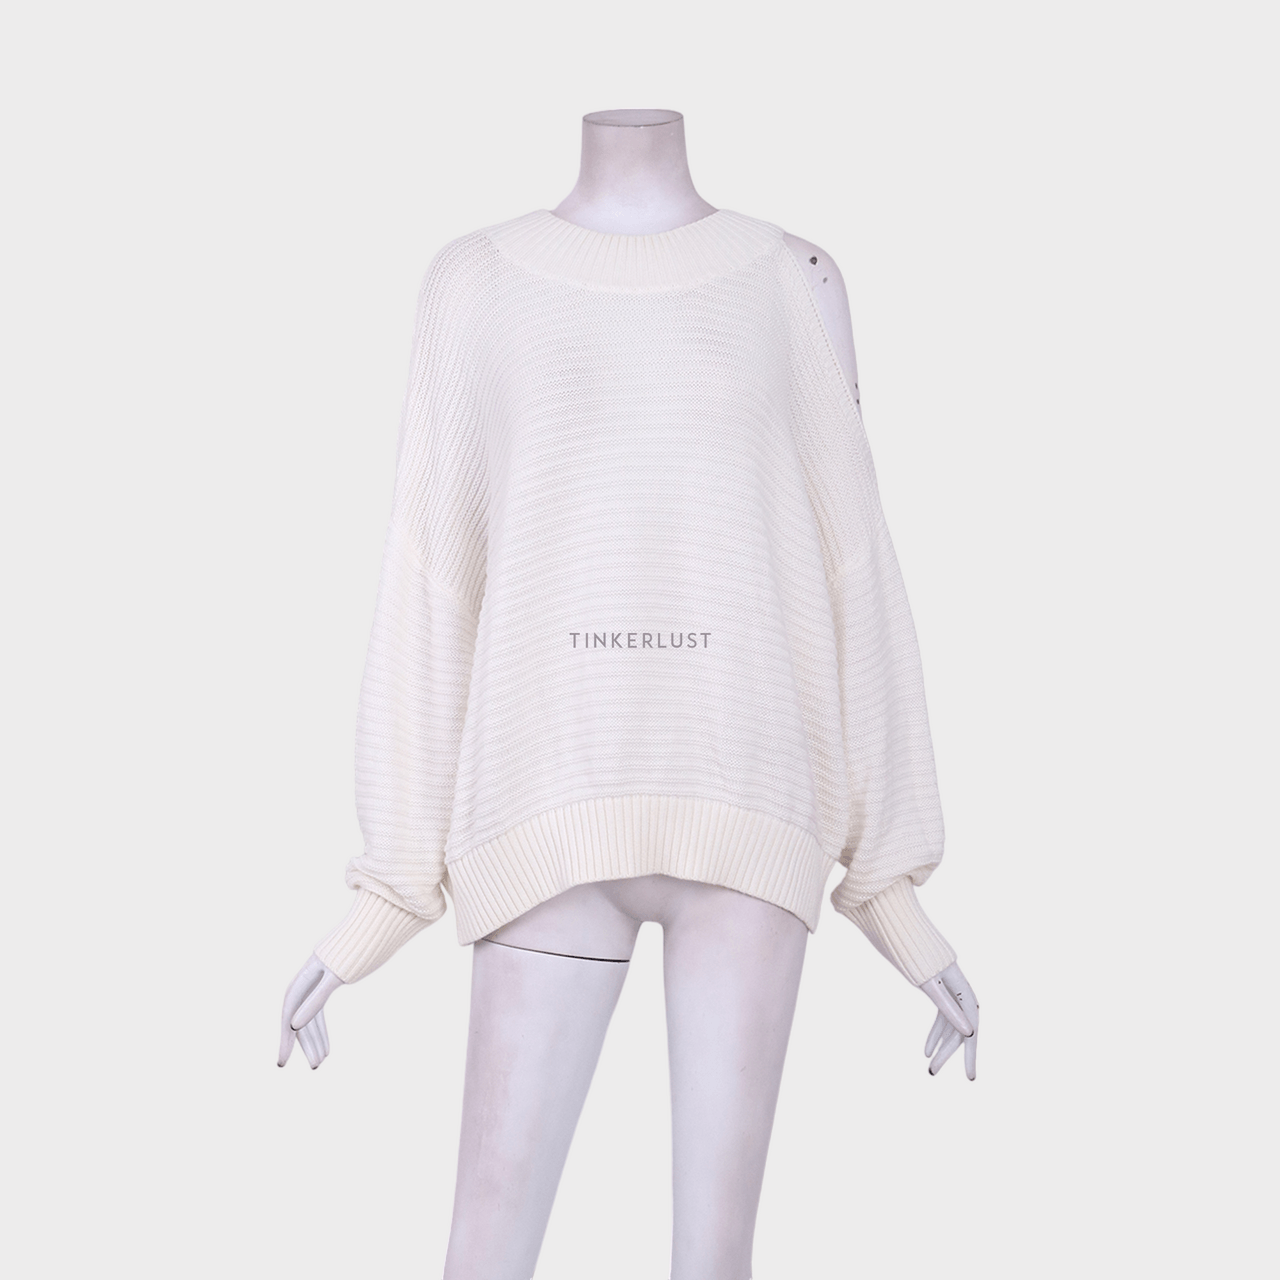 Lalu White Sweater